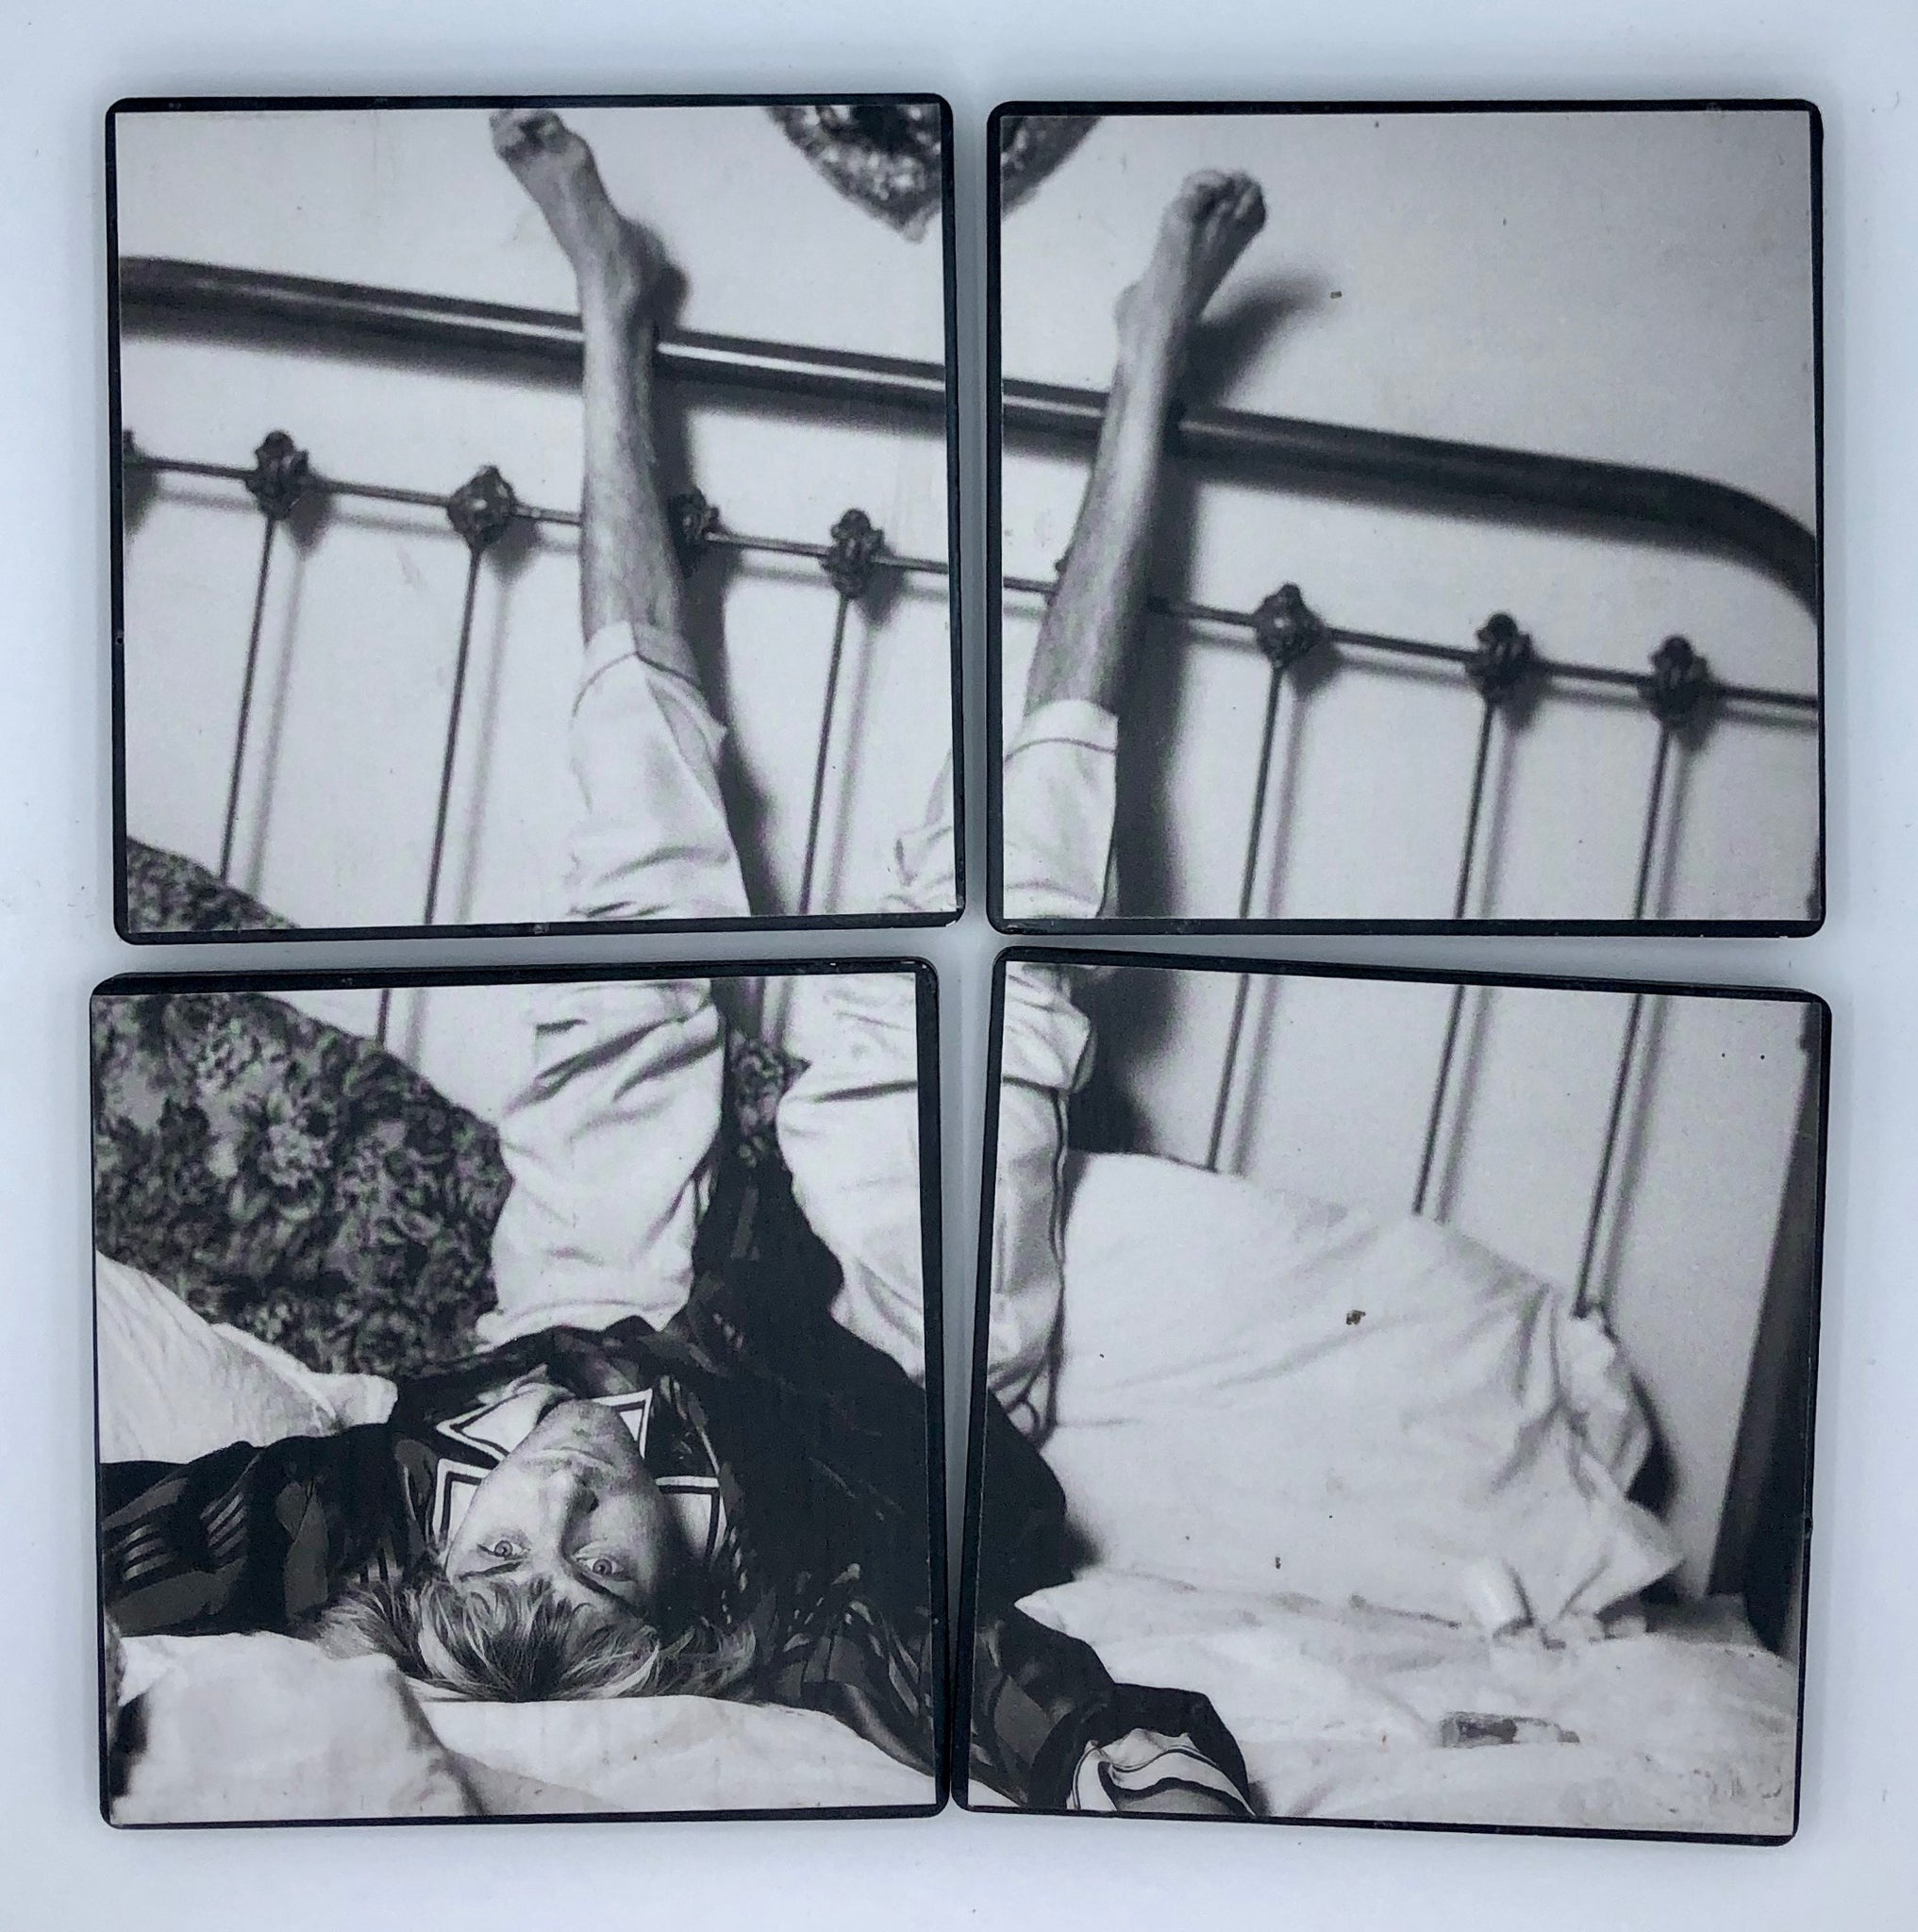 NIRVANA - Kurt Cobain upside down